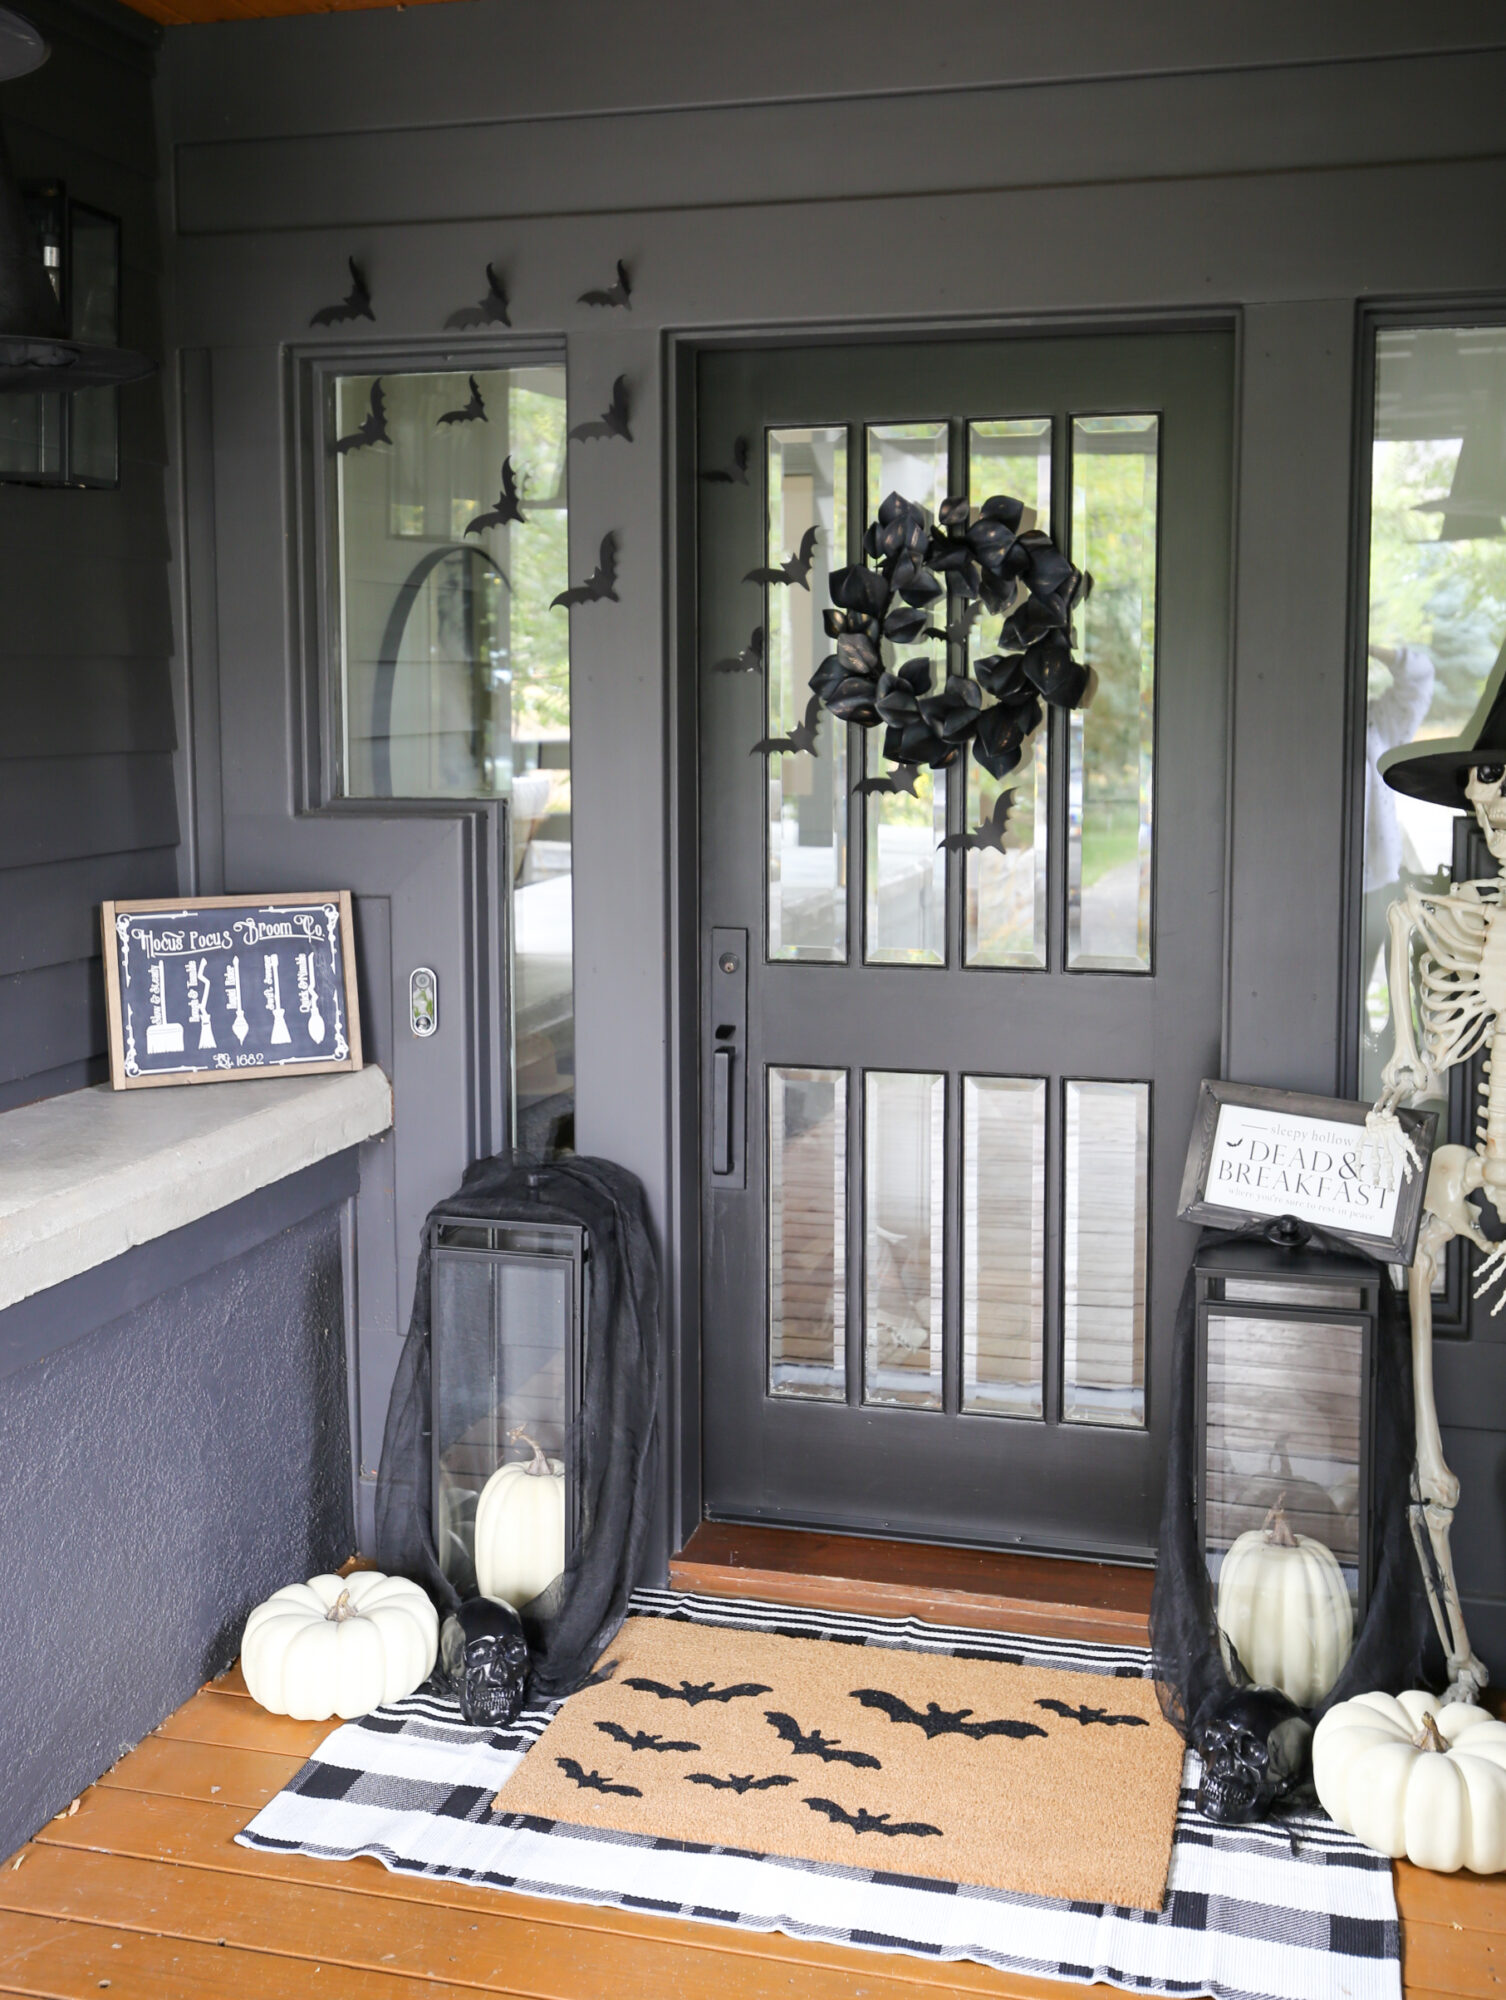 halloween front porch